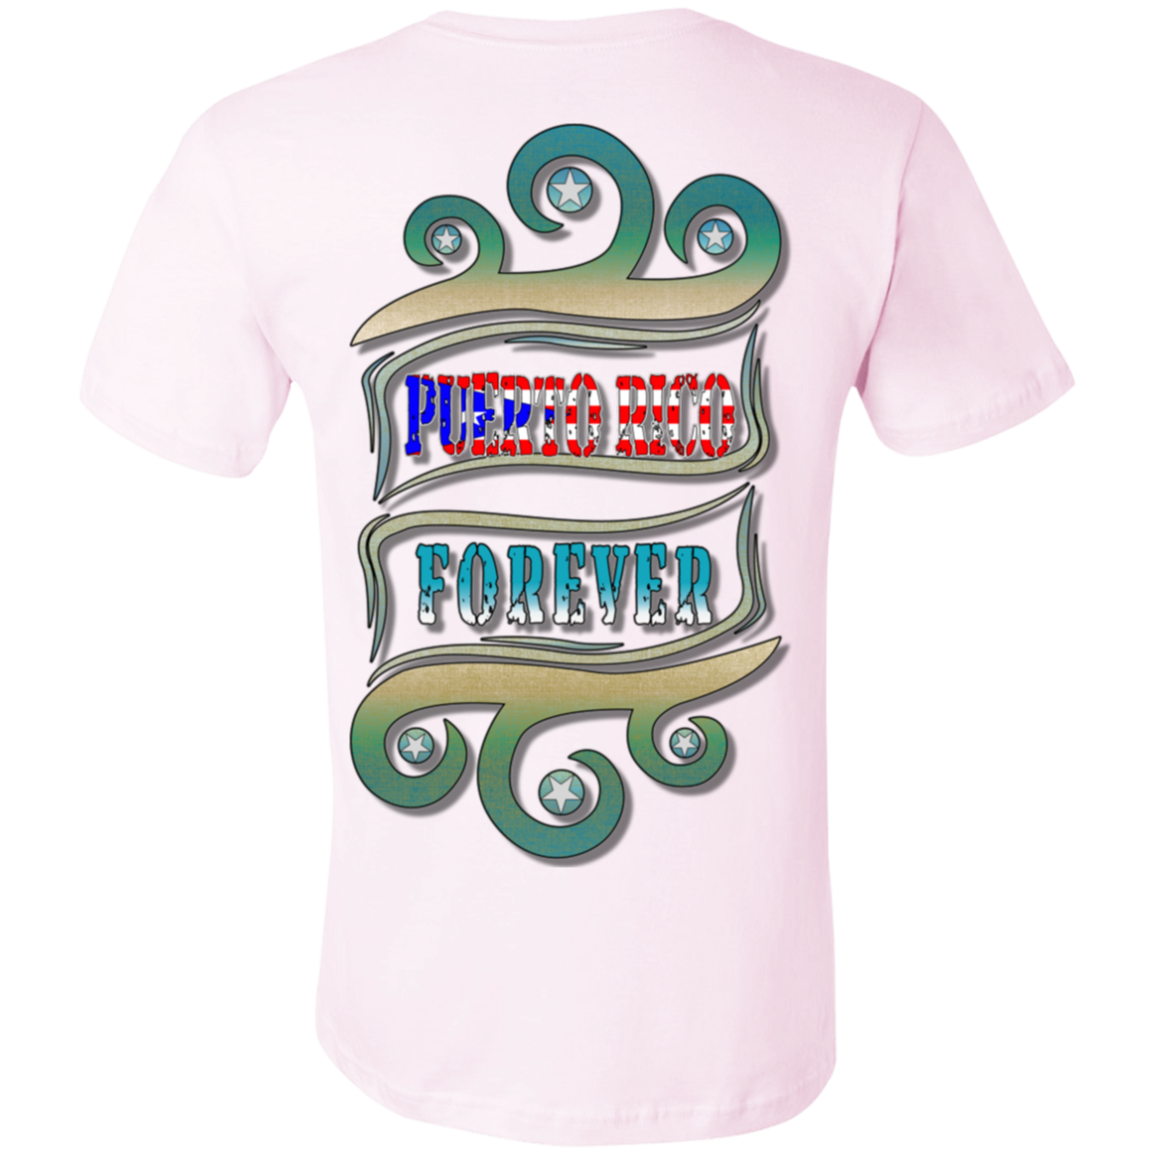 Puerto Rico Forever Unisex T-Shirt - Puerto Rican Pride